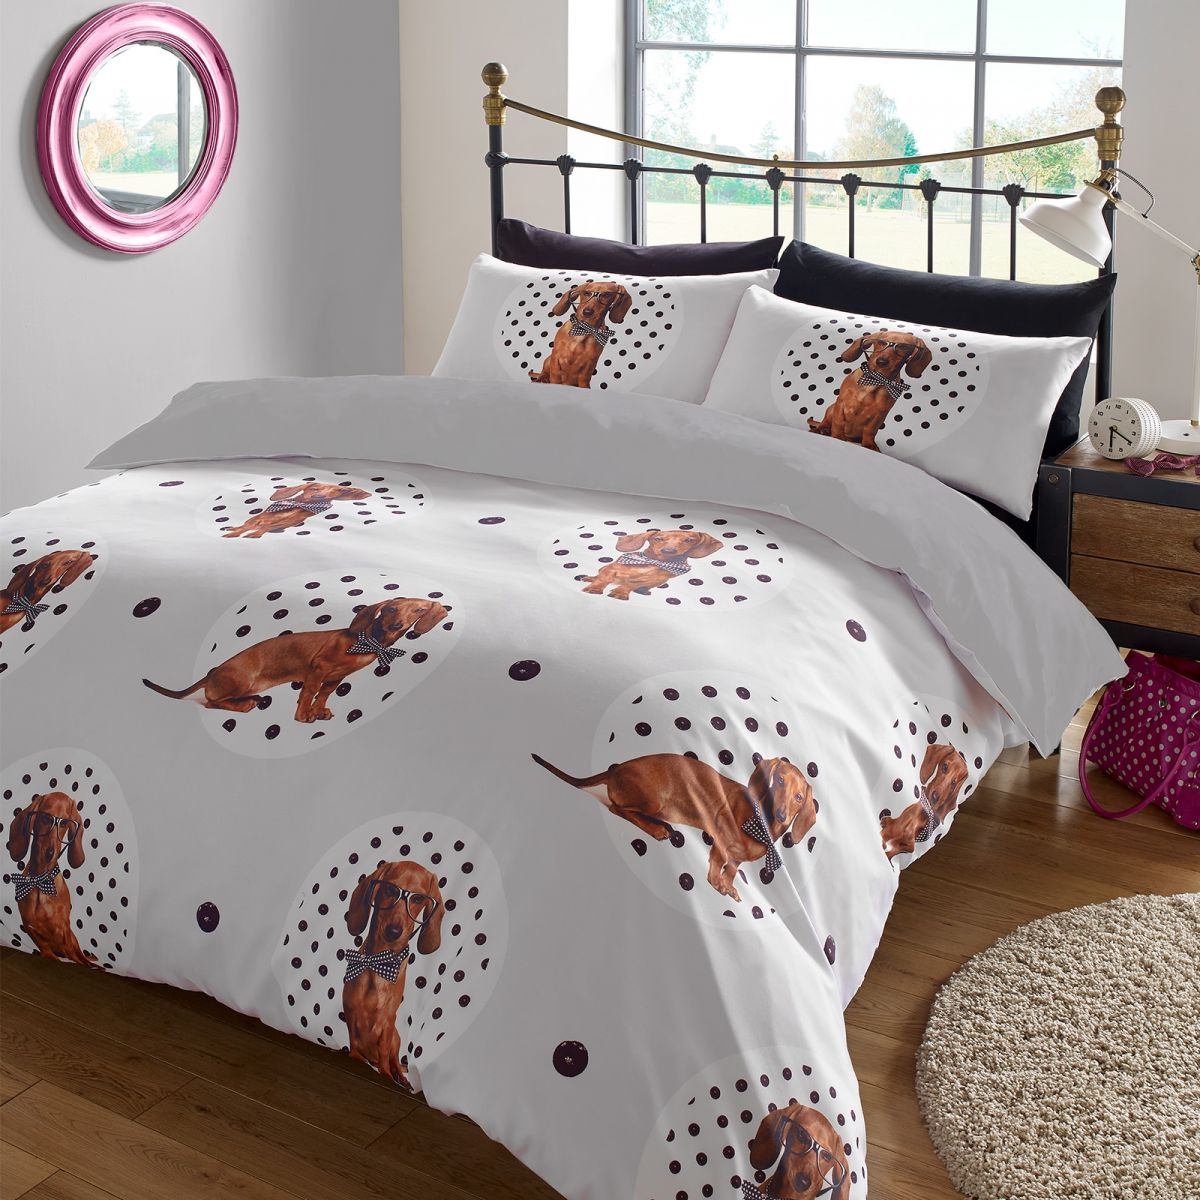 Dreamscene Dachshund Puppy Animal Print Duvet Cover with Pilllowcase Bedding Set - Double